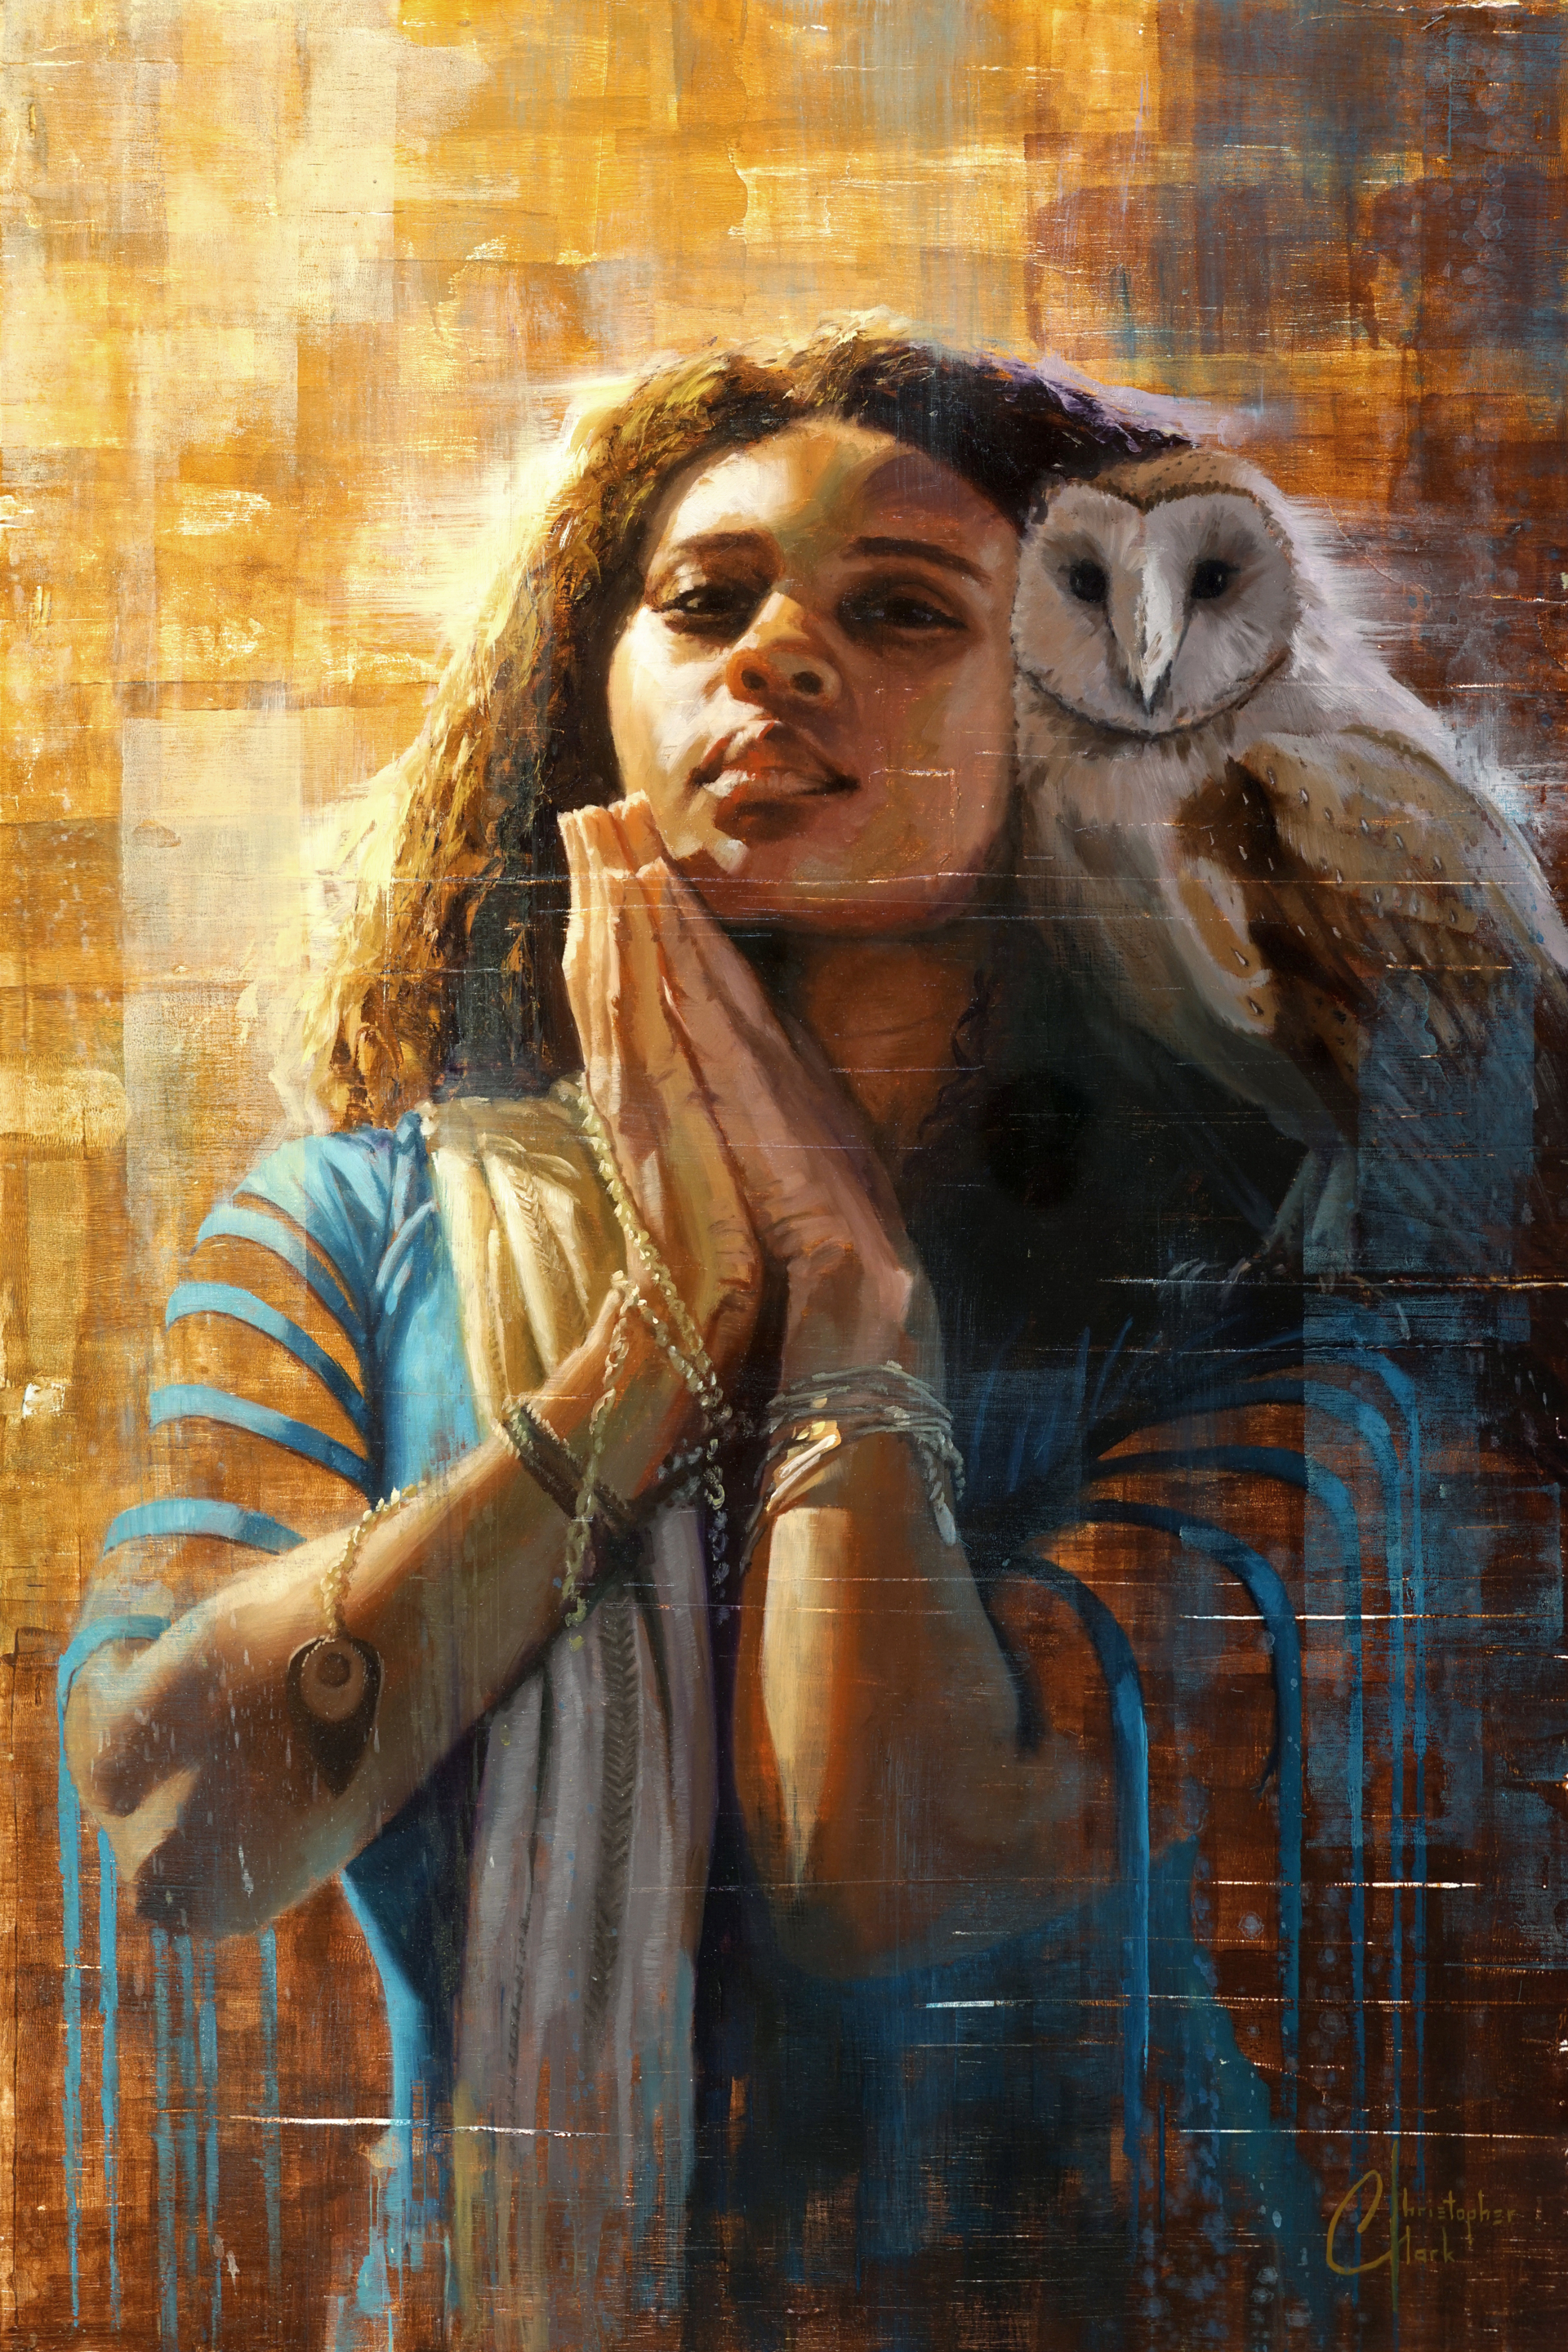 The Goddess of Wisdom by Christopher Clark